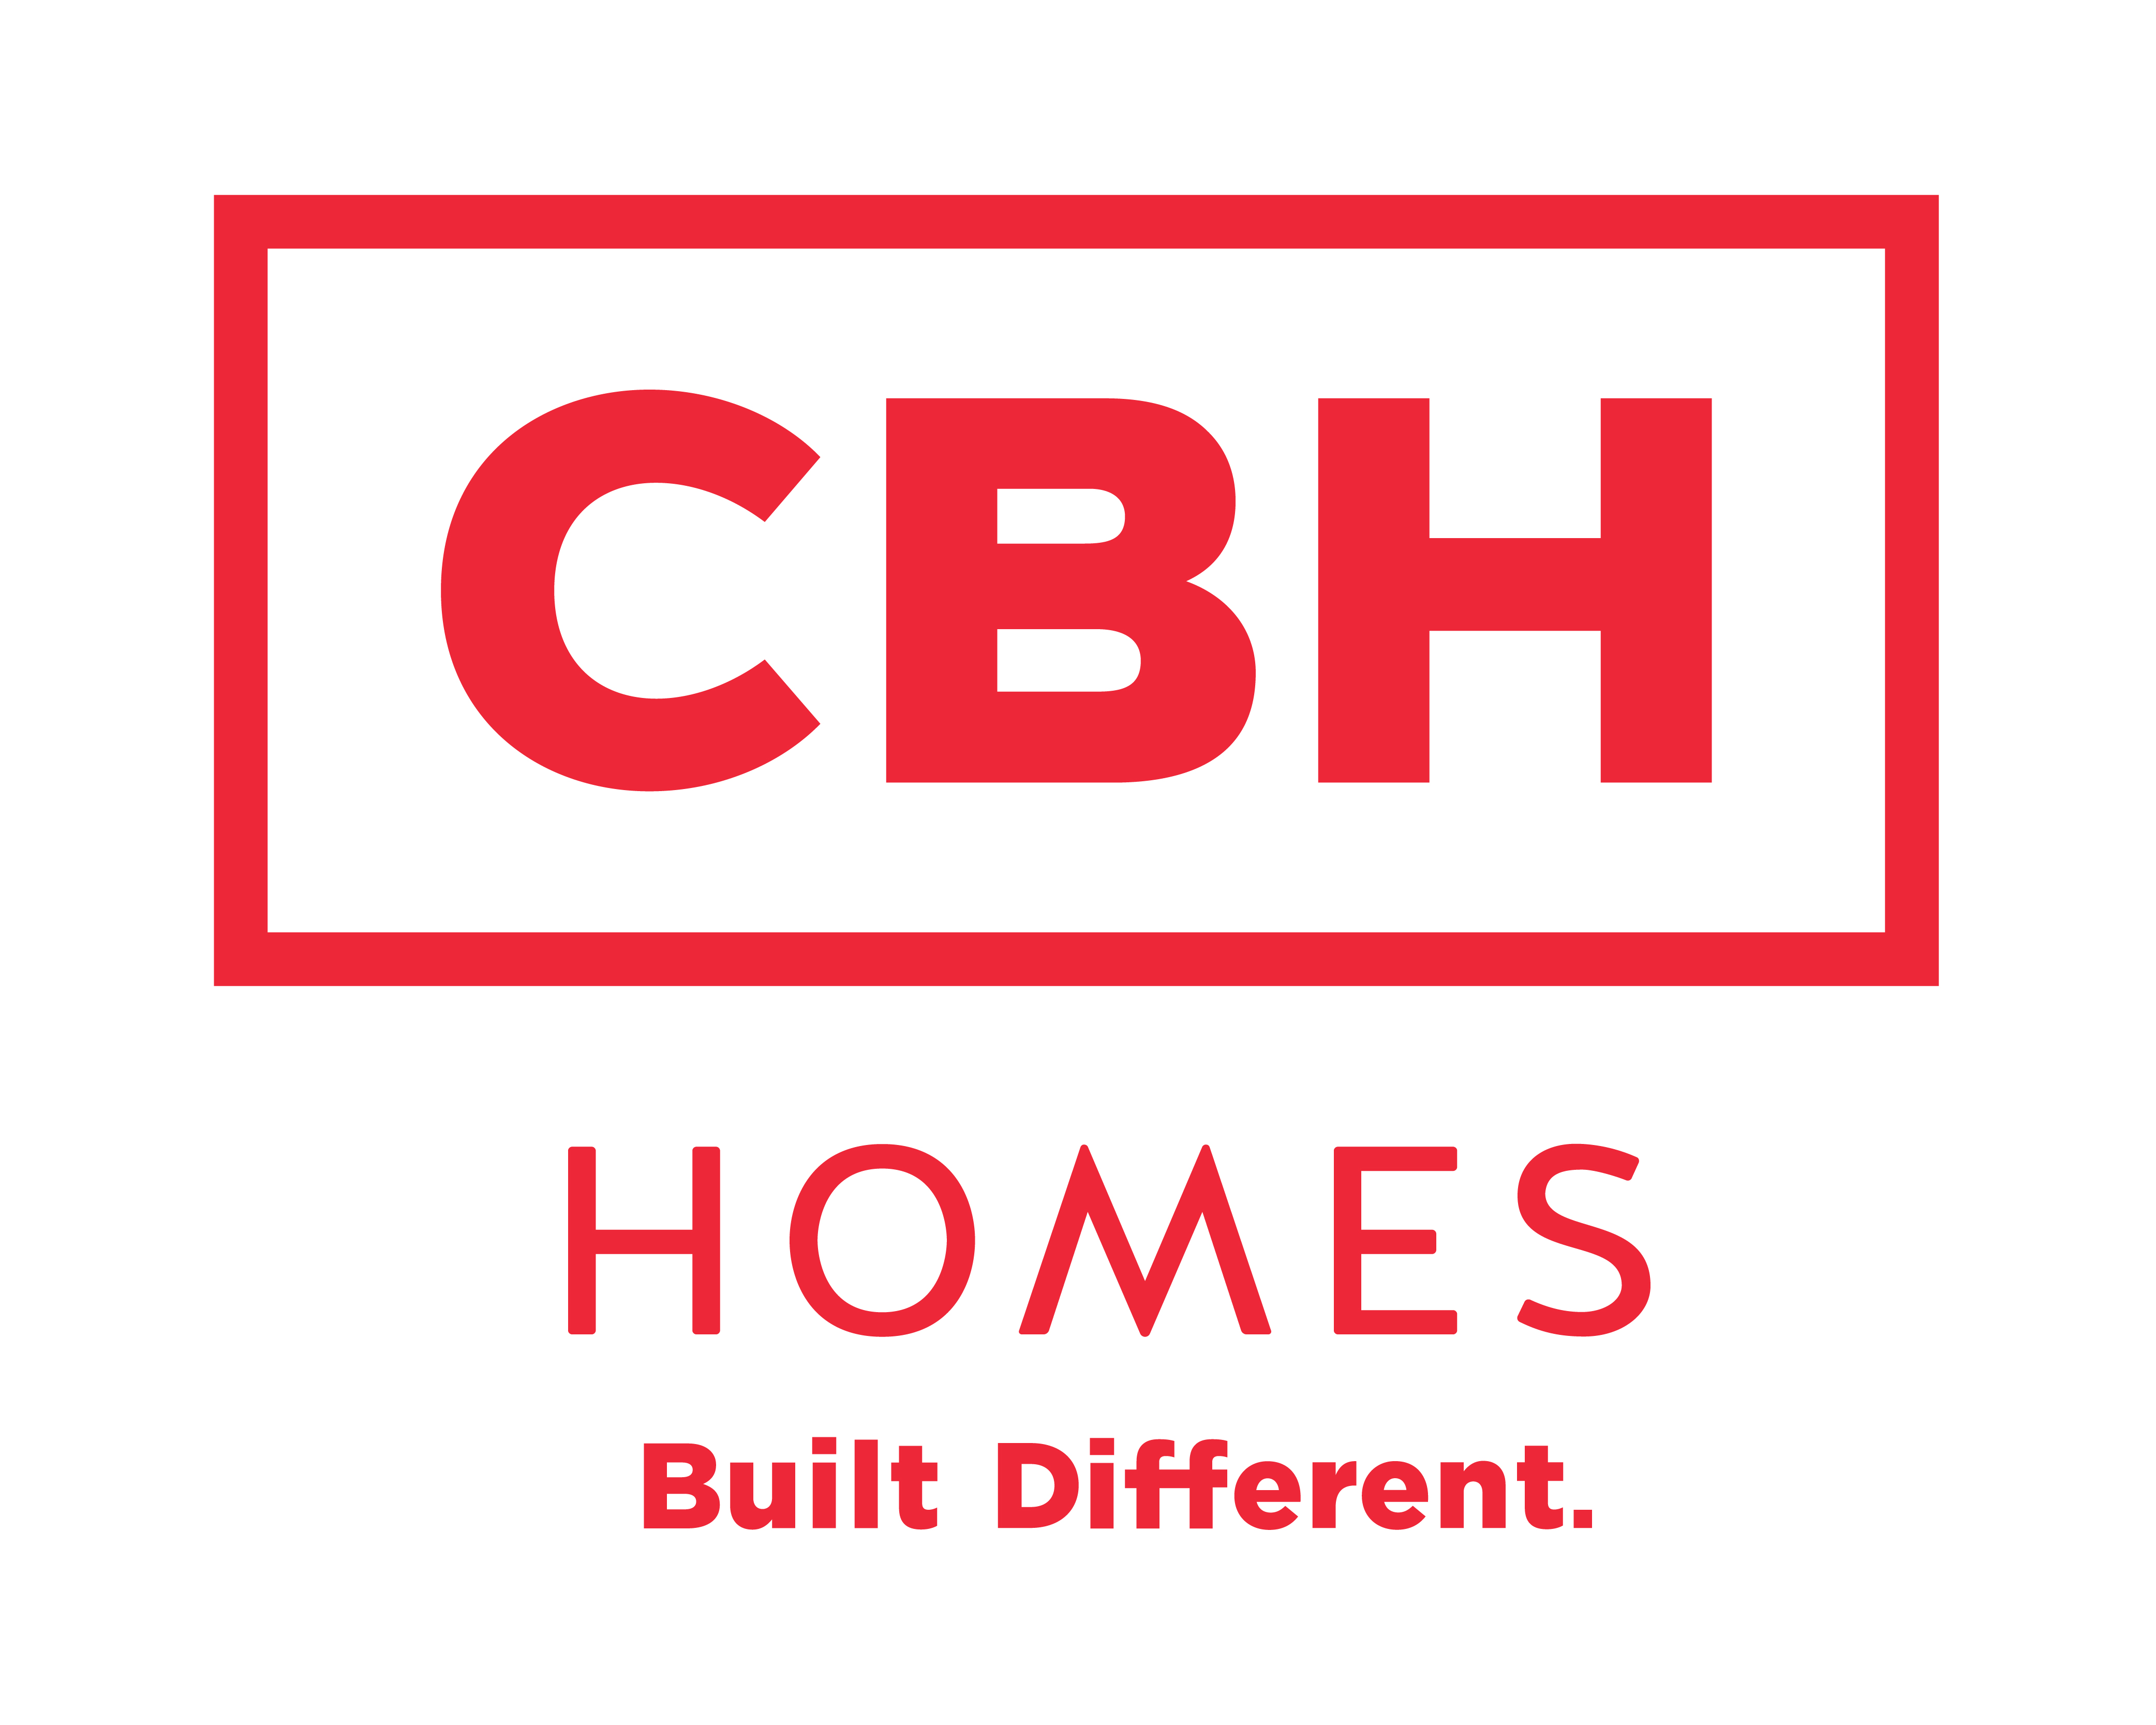 CBH Homes